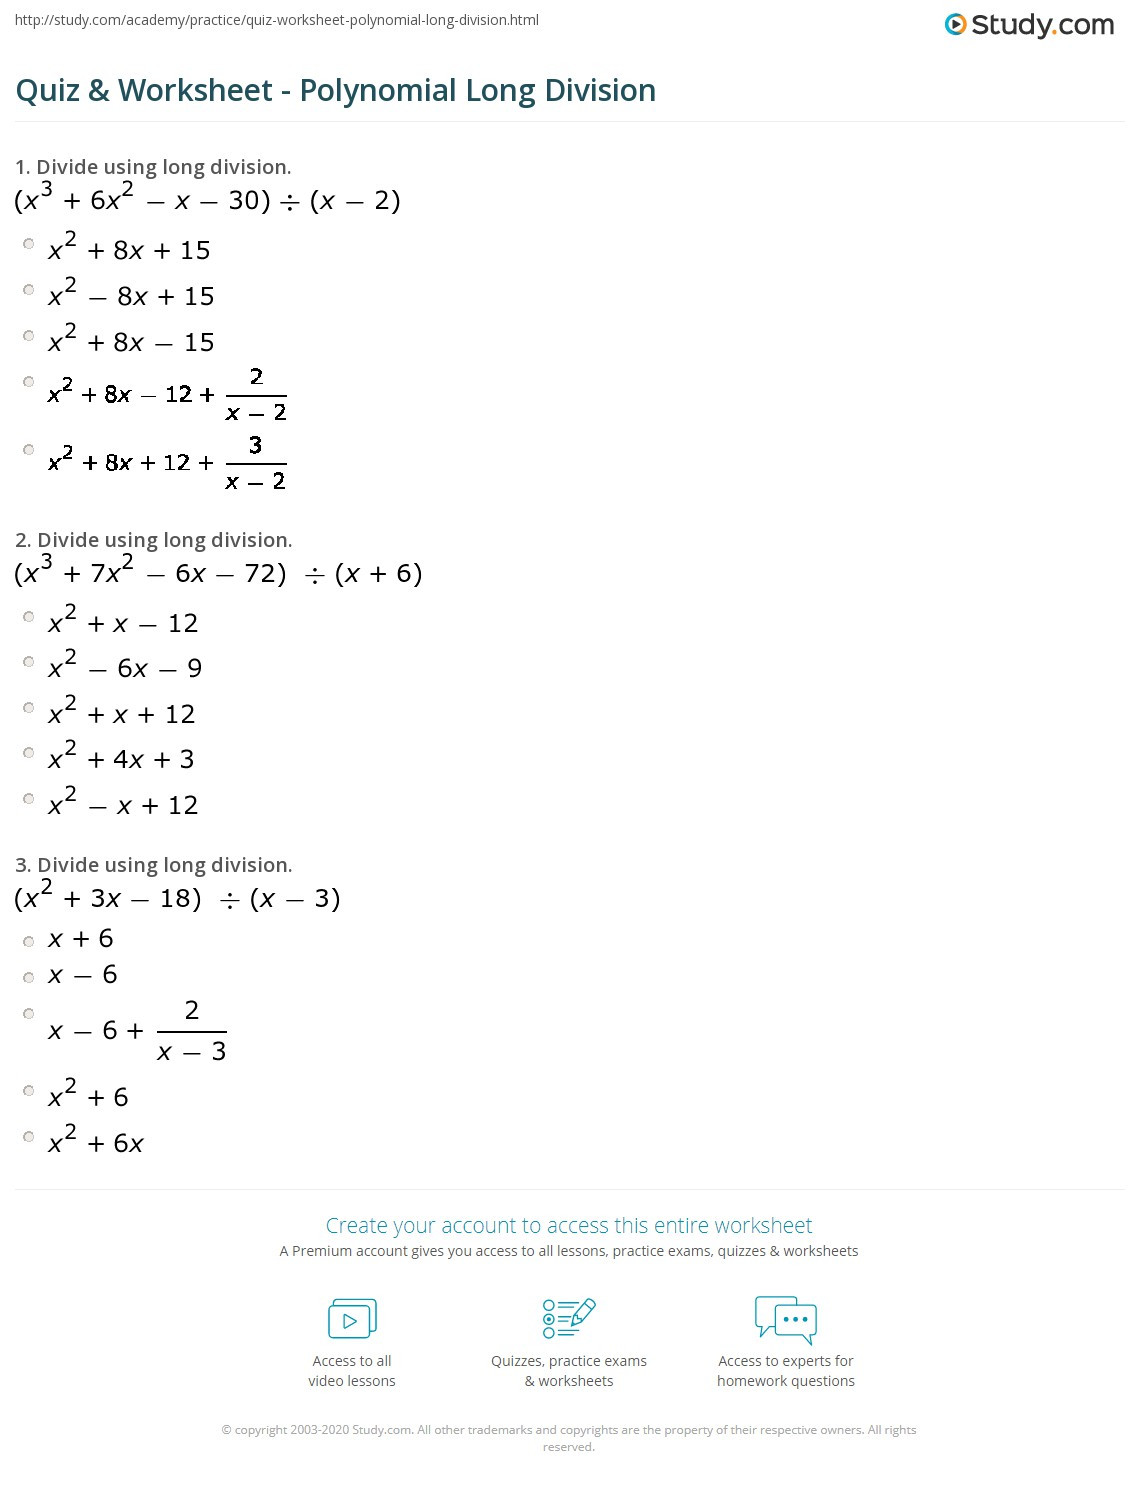 Dividing Polynomials by Monomials Worksheet Quiz &amp; Worksheet Polynomial Long Division